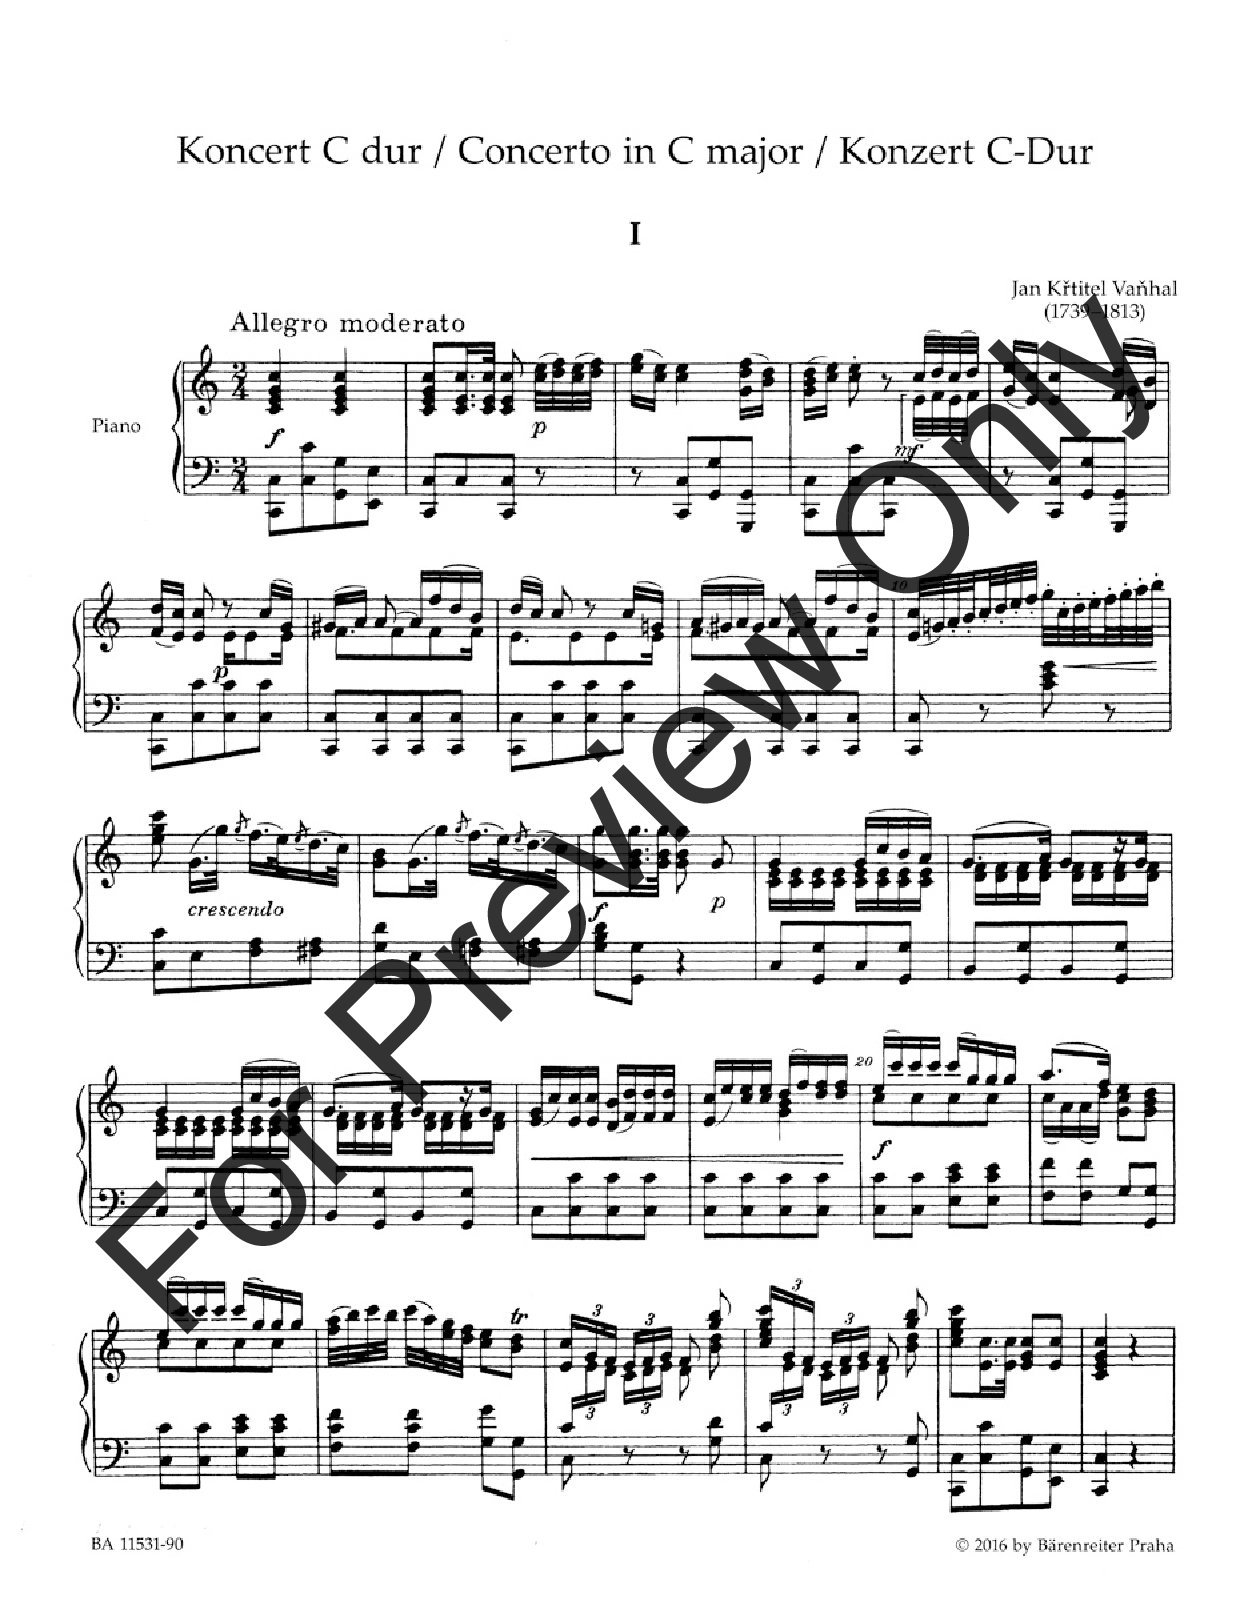 Concerto in C Major Viola and Piano Reduction